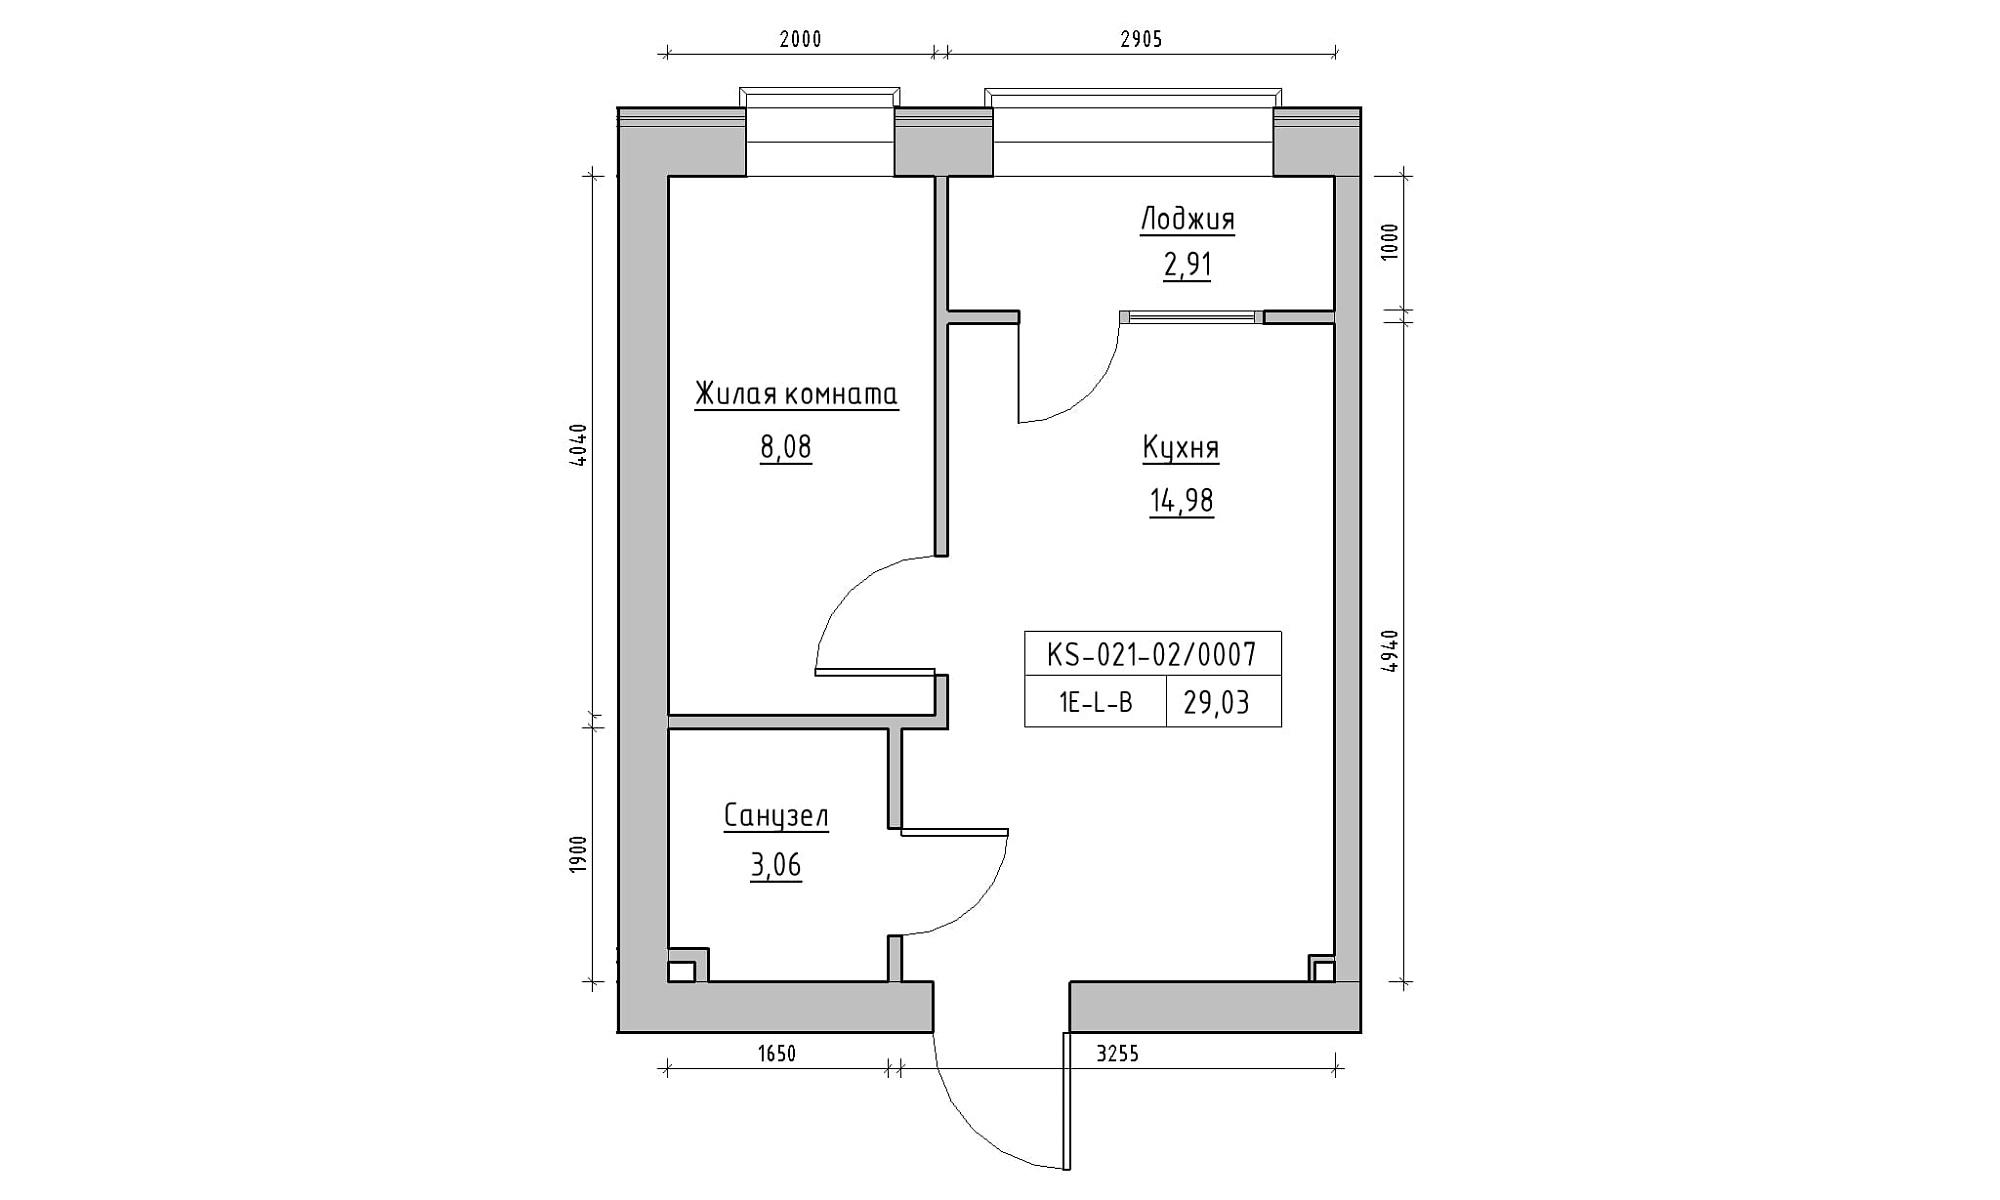 Planning 1-rm flats area 29.03m2, KS-021-02/0007.